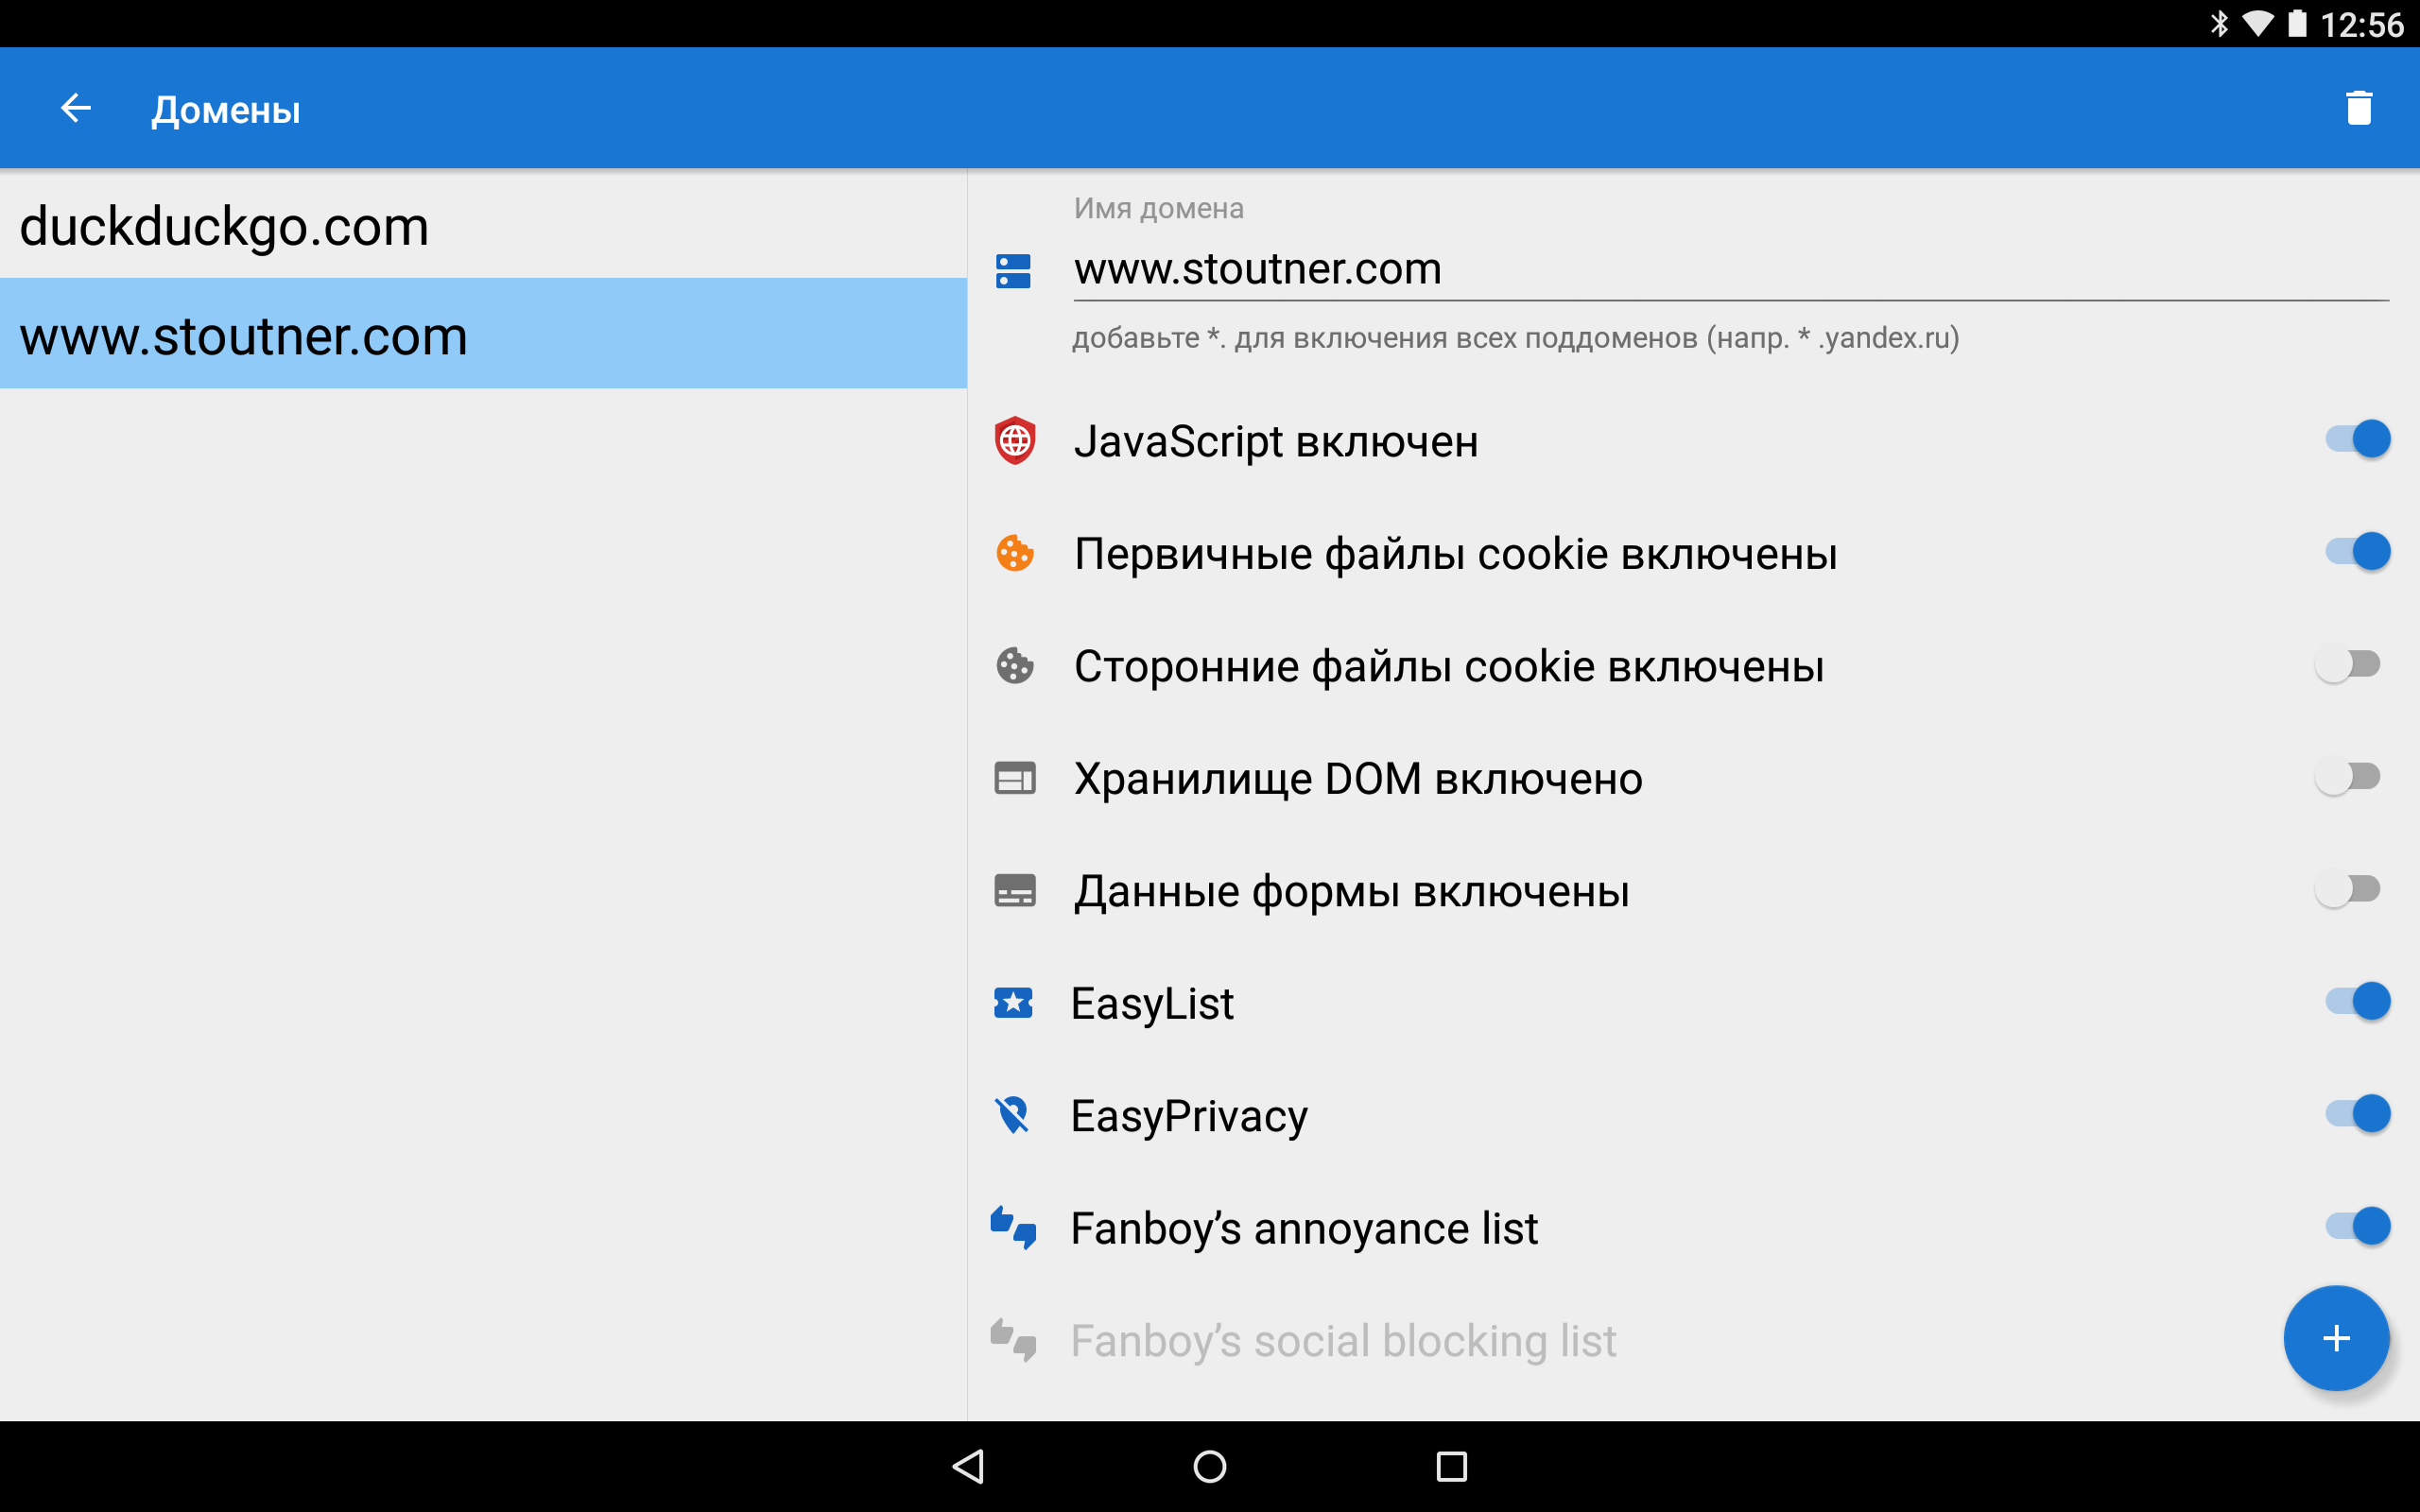 fastlane/metadata/android/ru-RU/images/tenInchScreenshots/01-Domains.png